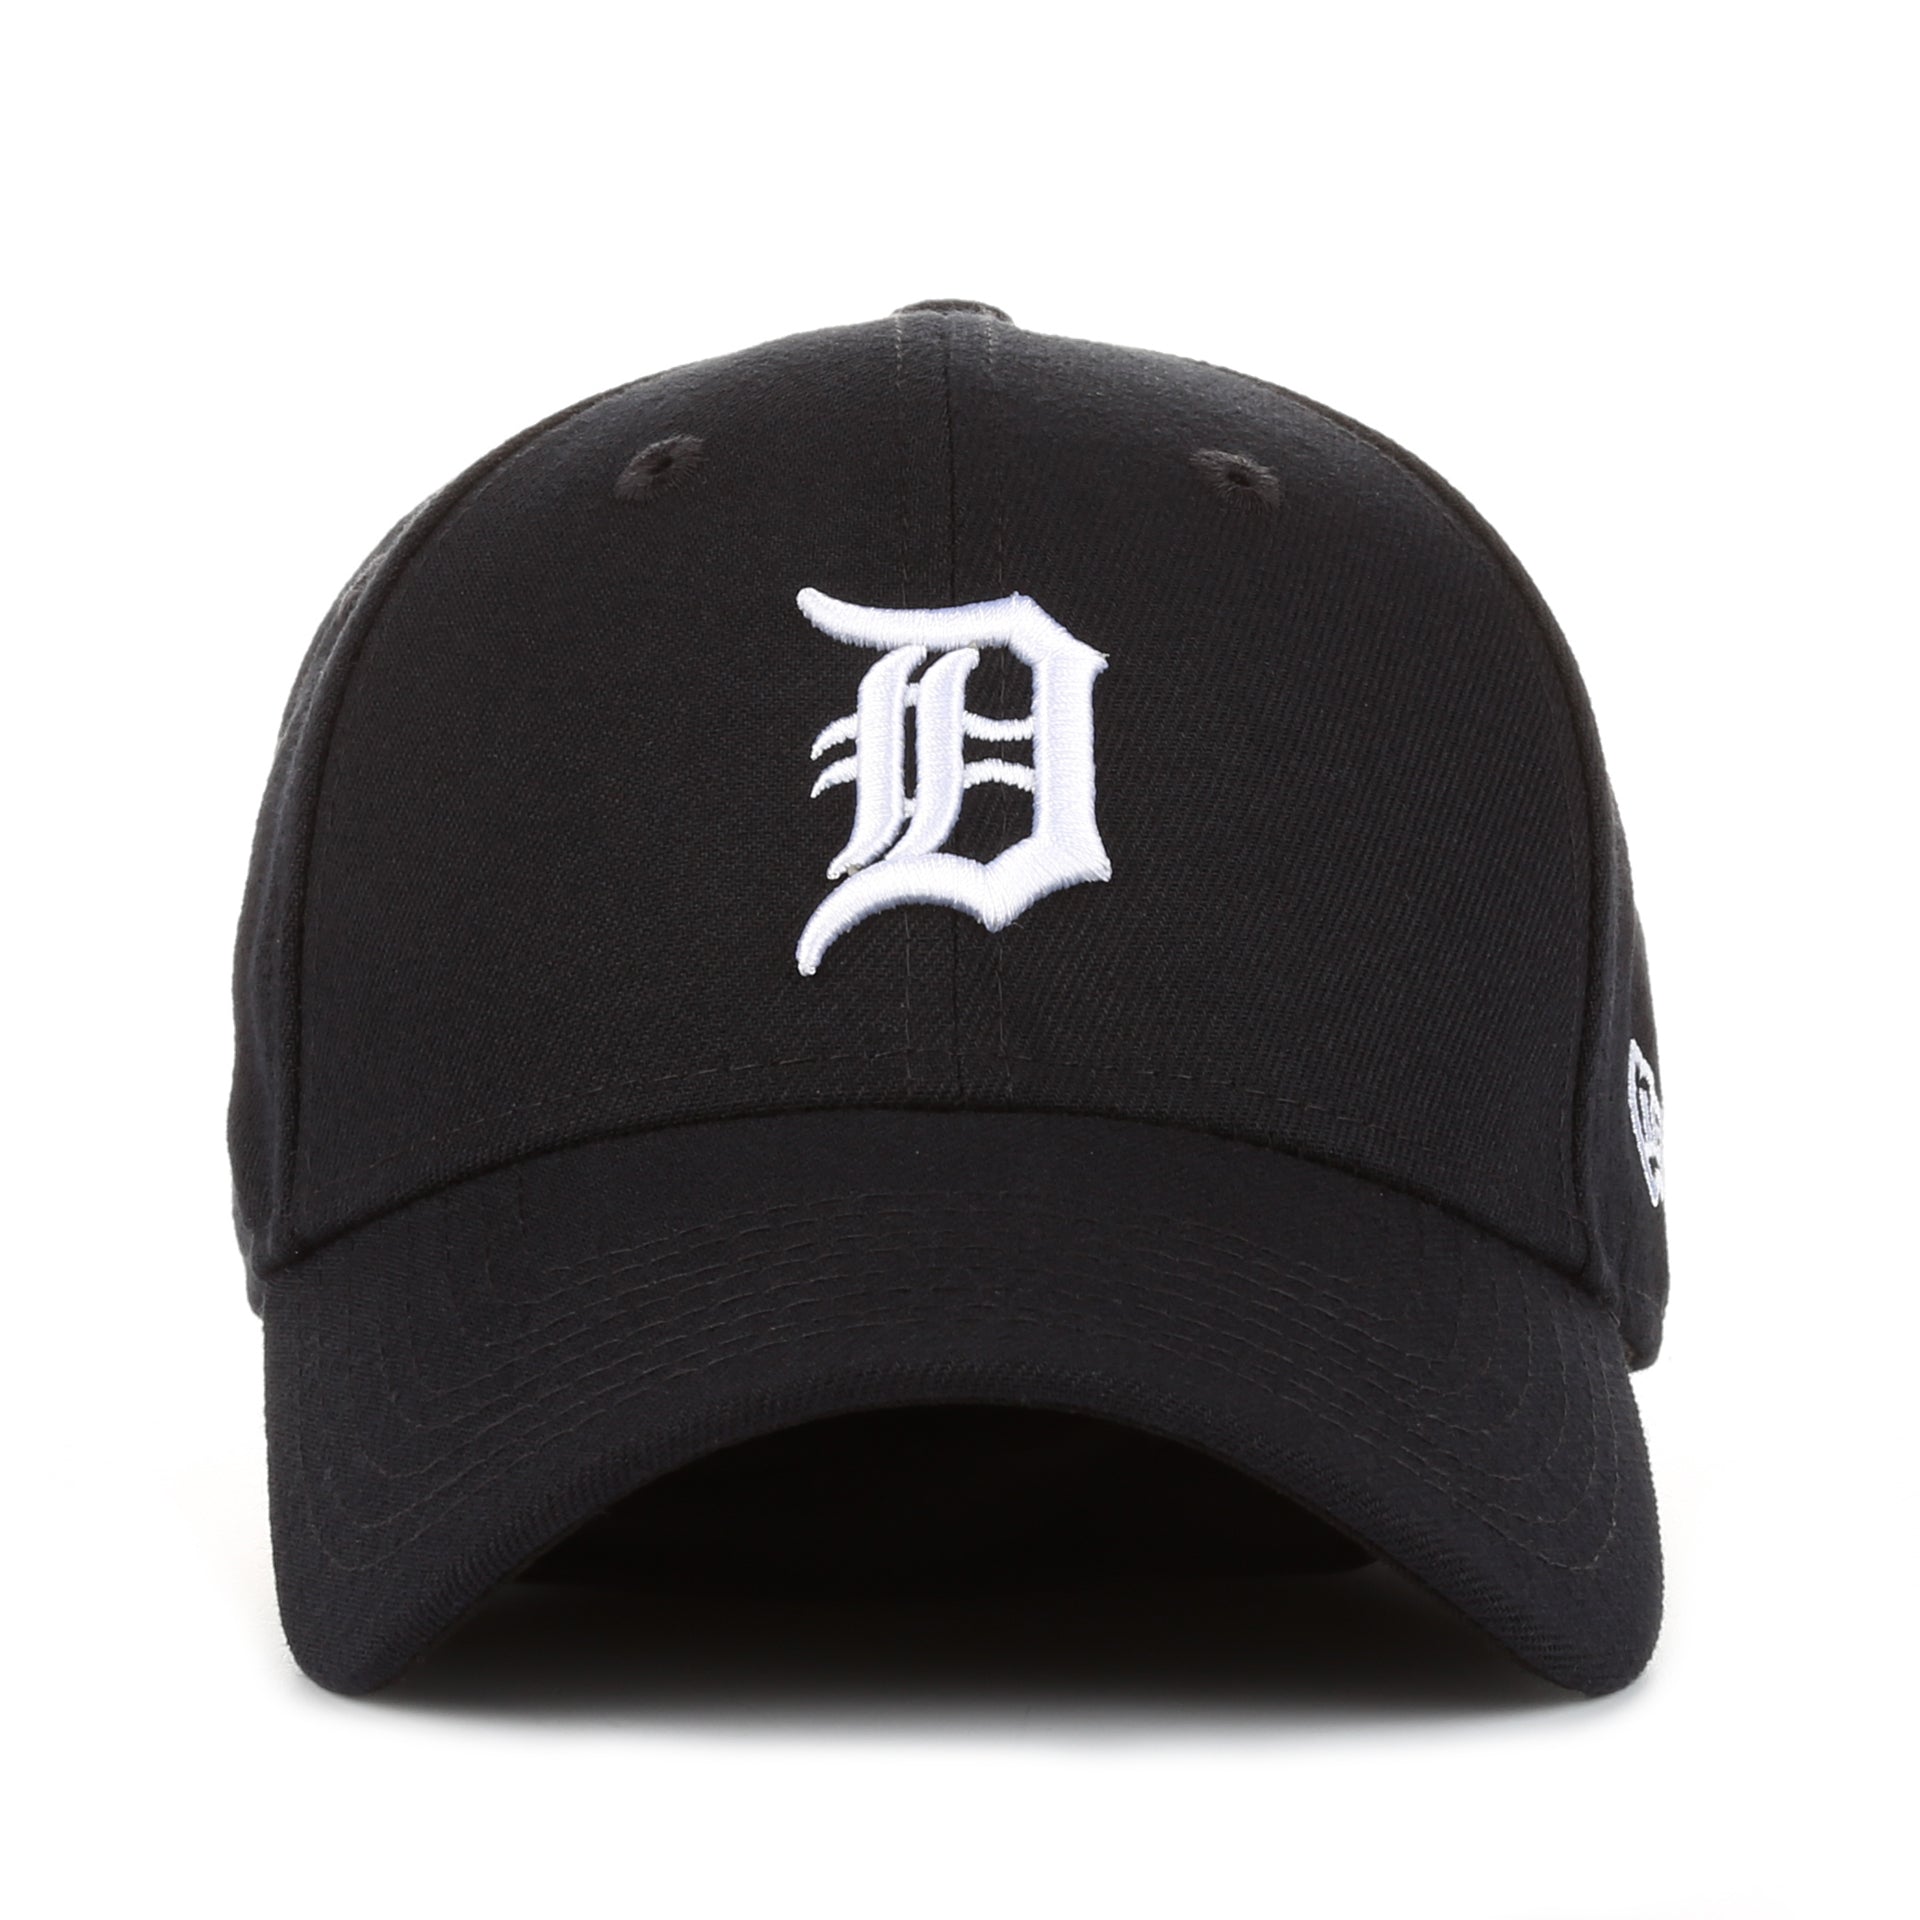 New Era 9Fifty League Basic Snapback - Detroit Tigers/Black - New Star